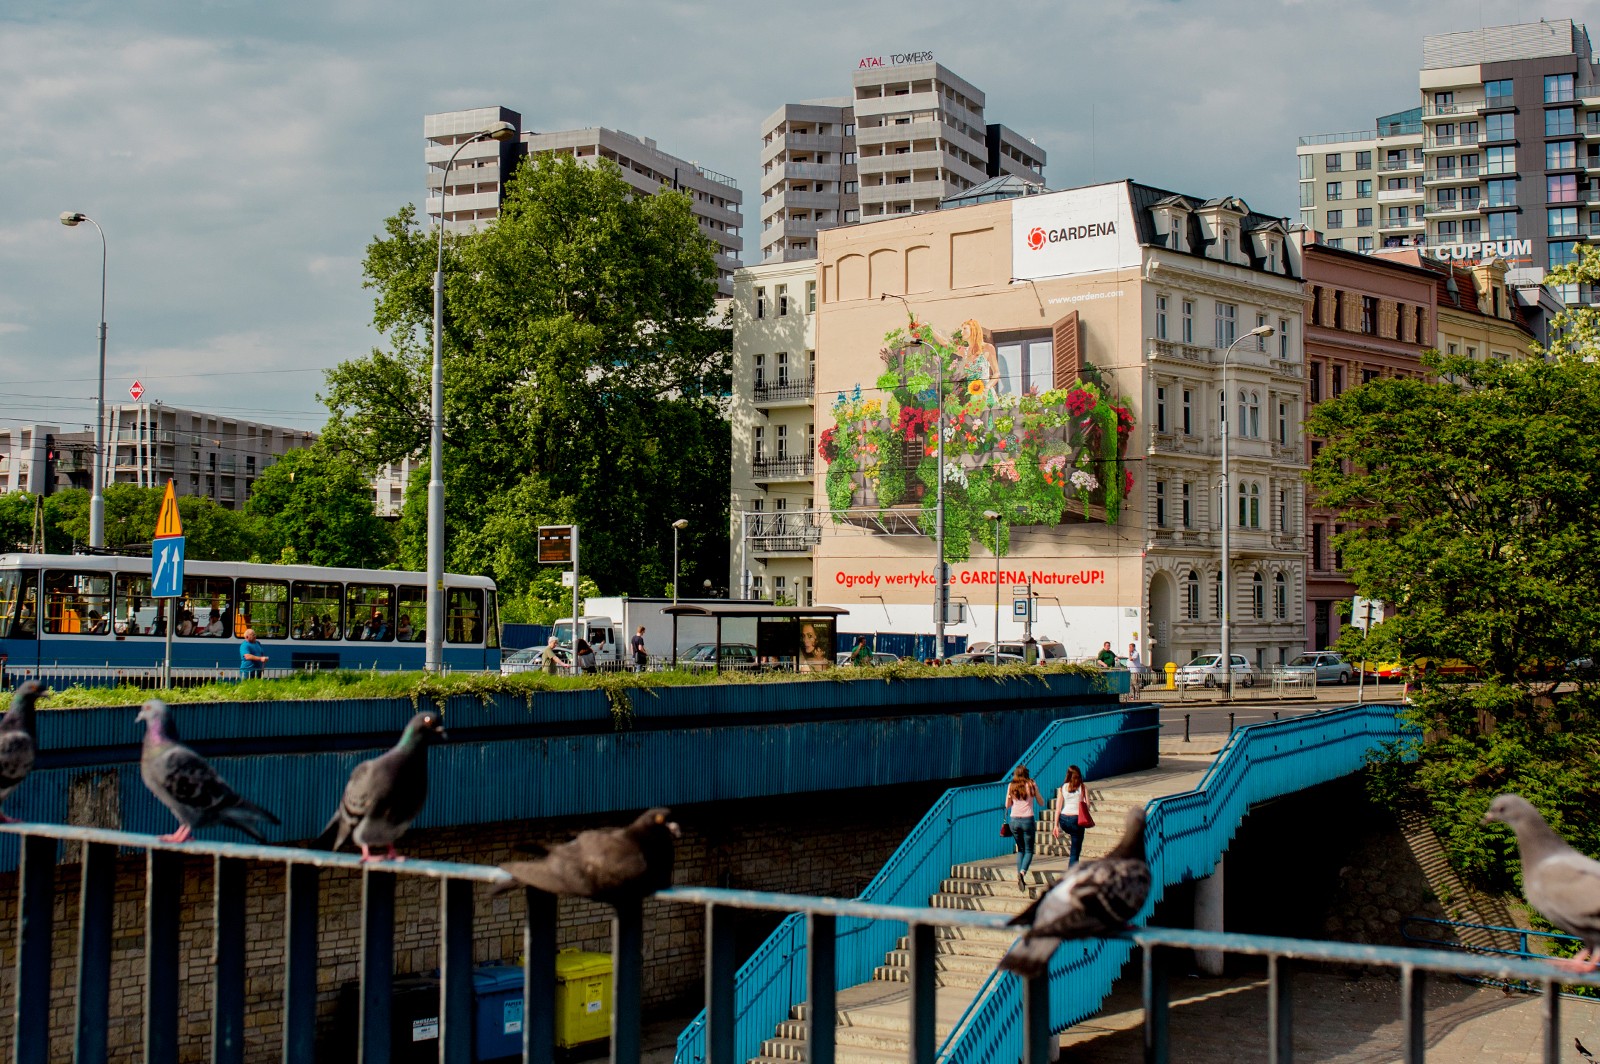 3d advertising mural in wroclaw for gardena | Gardena | Portfolio